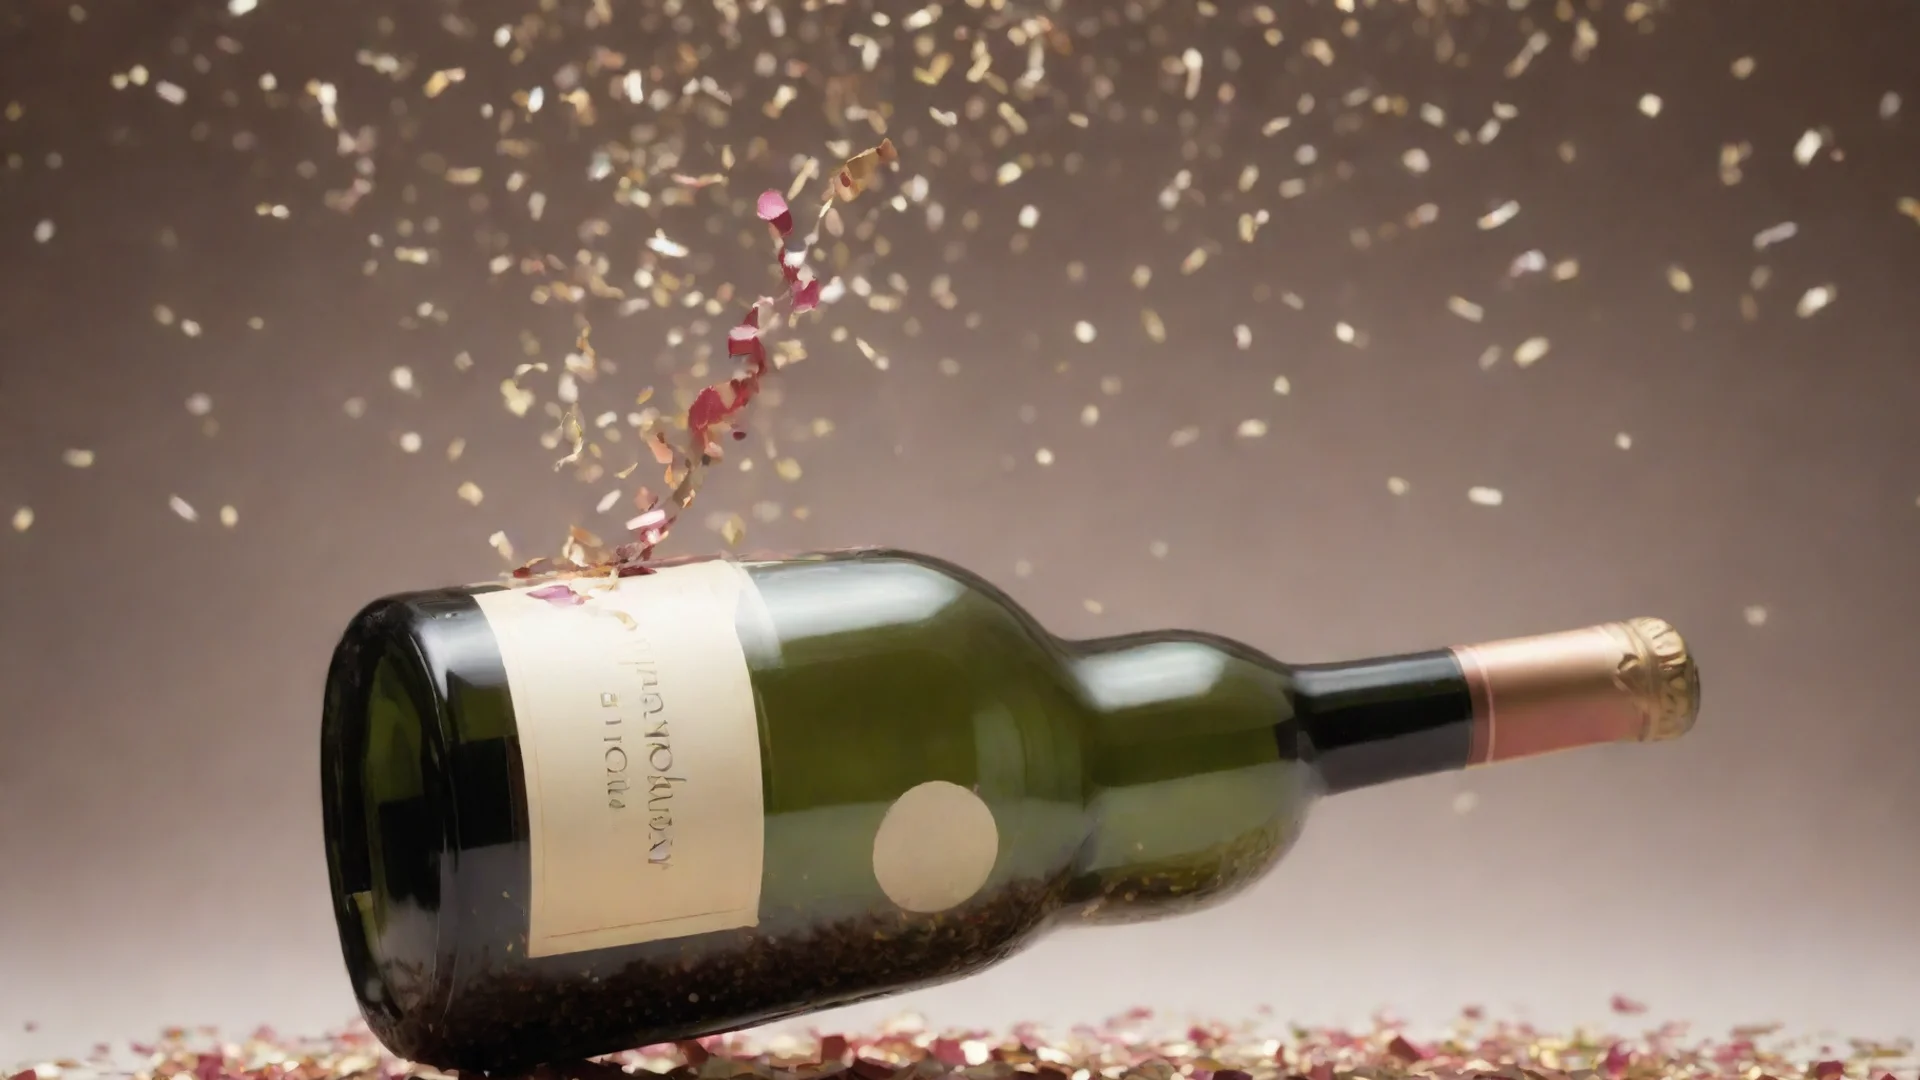 aiwine bottle pop confetti champaigne celebration wonderful detailed asthetic wide